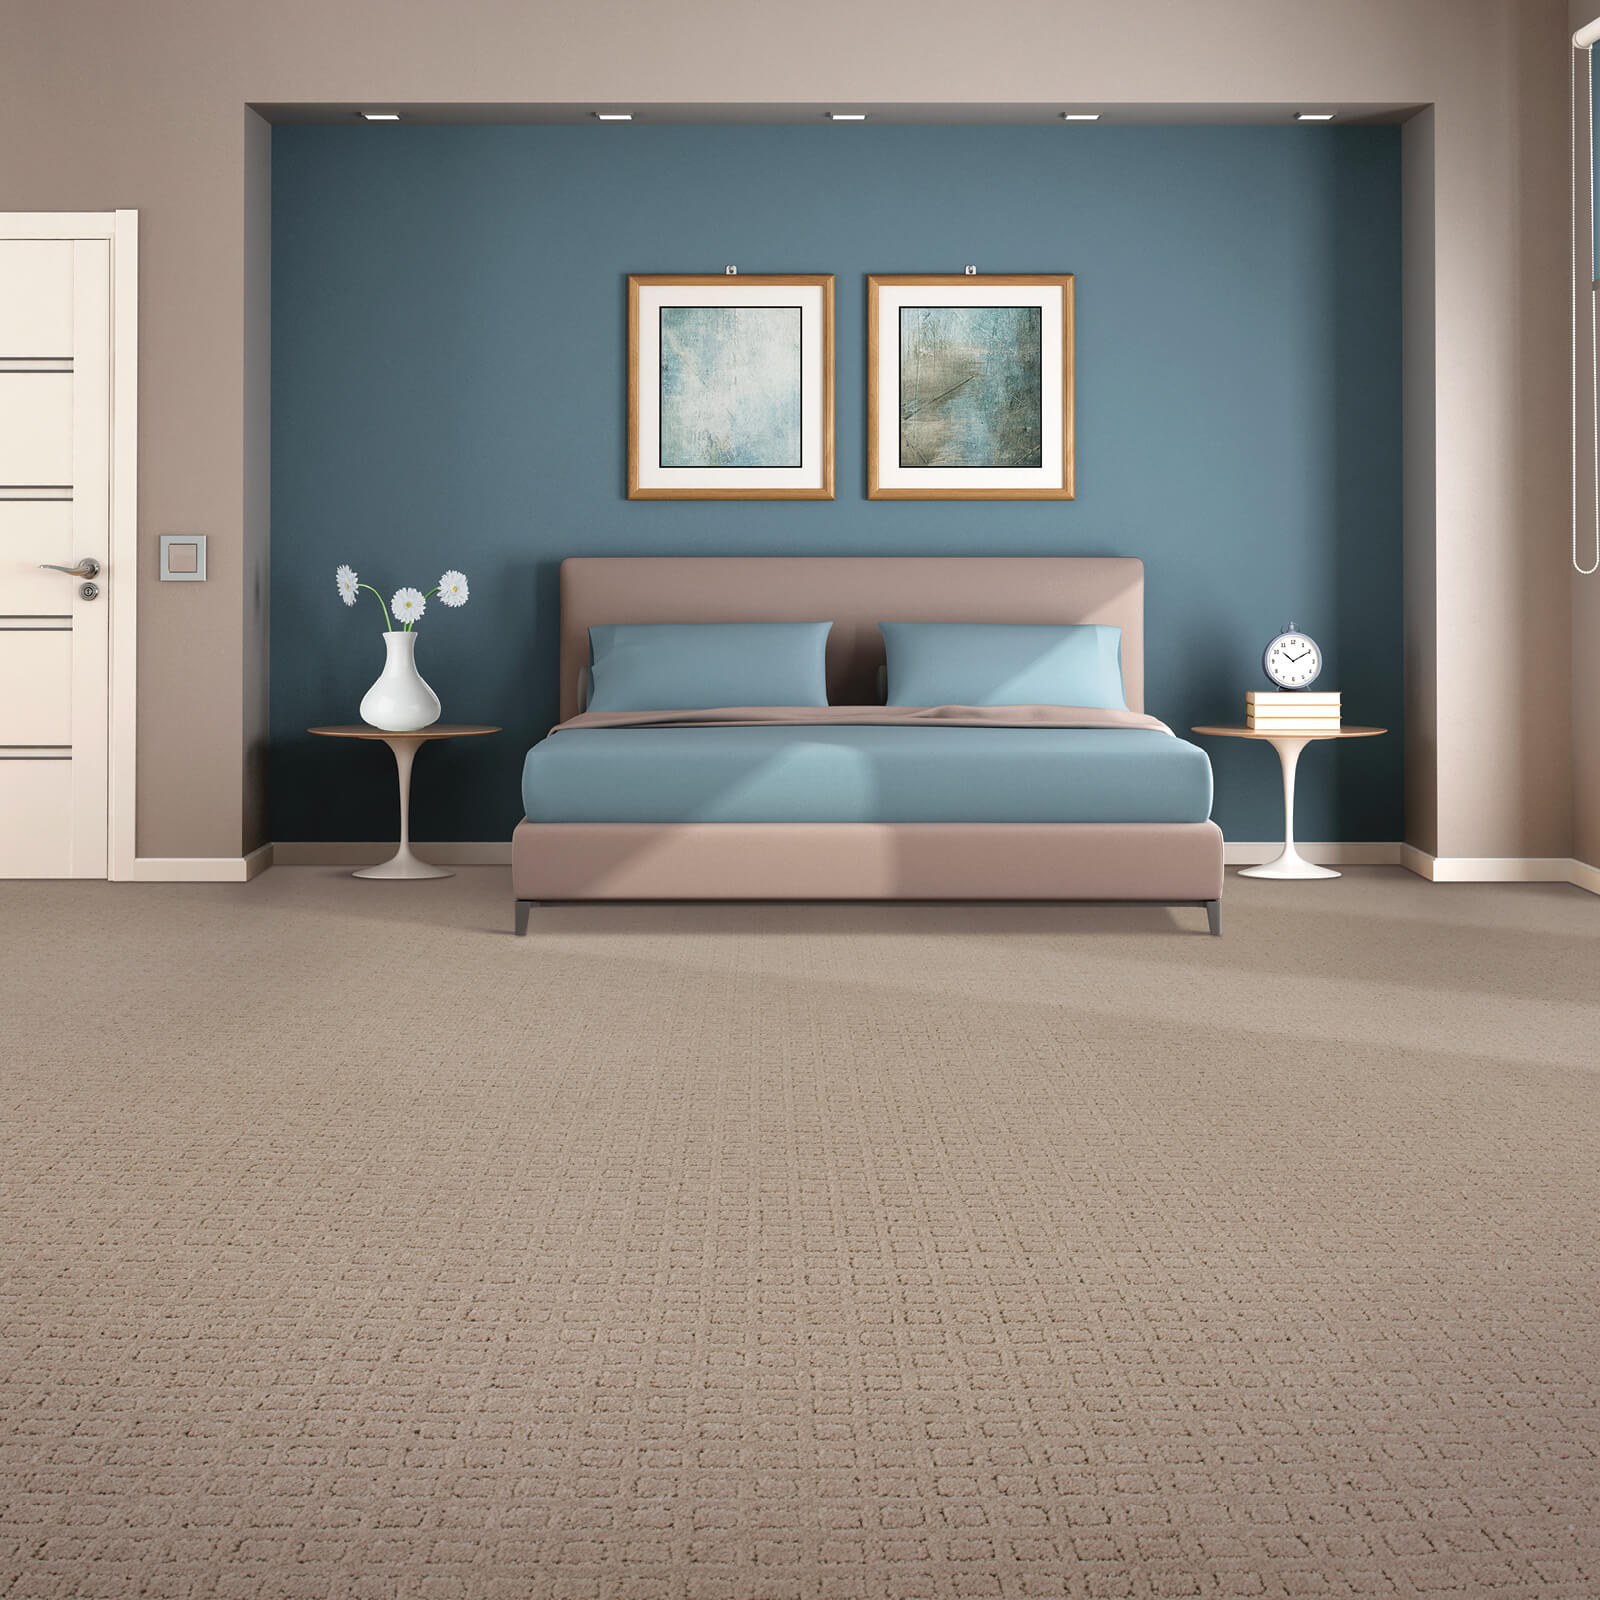 Traditional beauty of bedroom | Gilman Floors